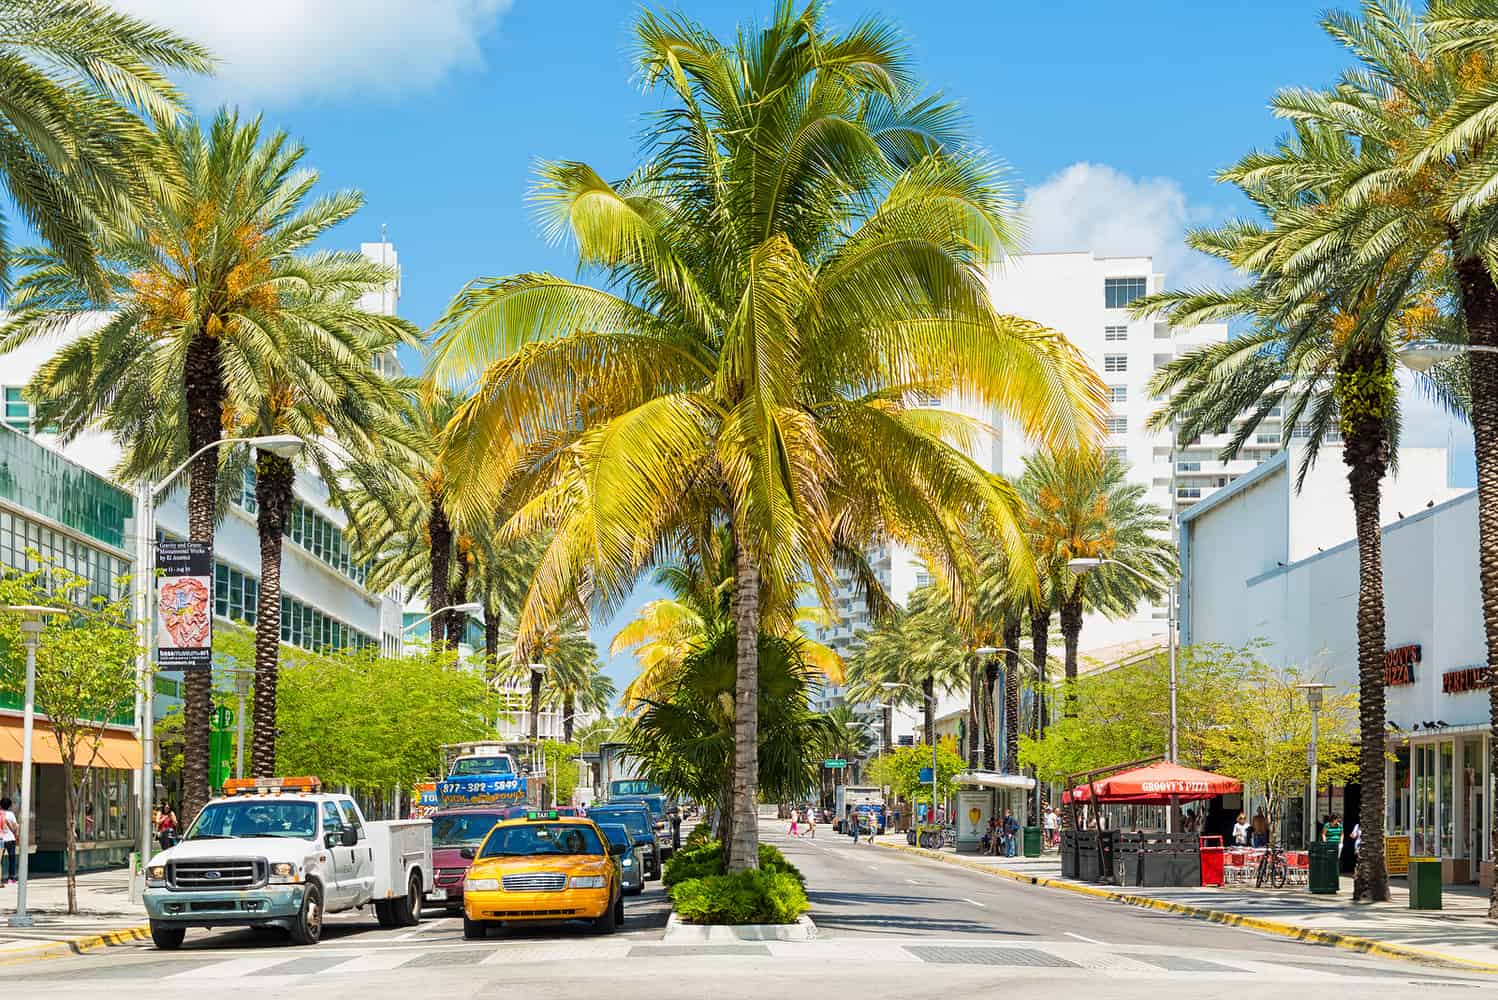 Downtown Miami Shopping - South Florida on the Cheap